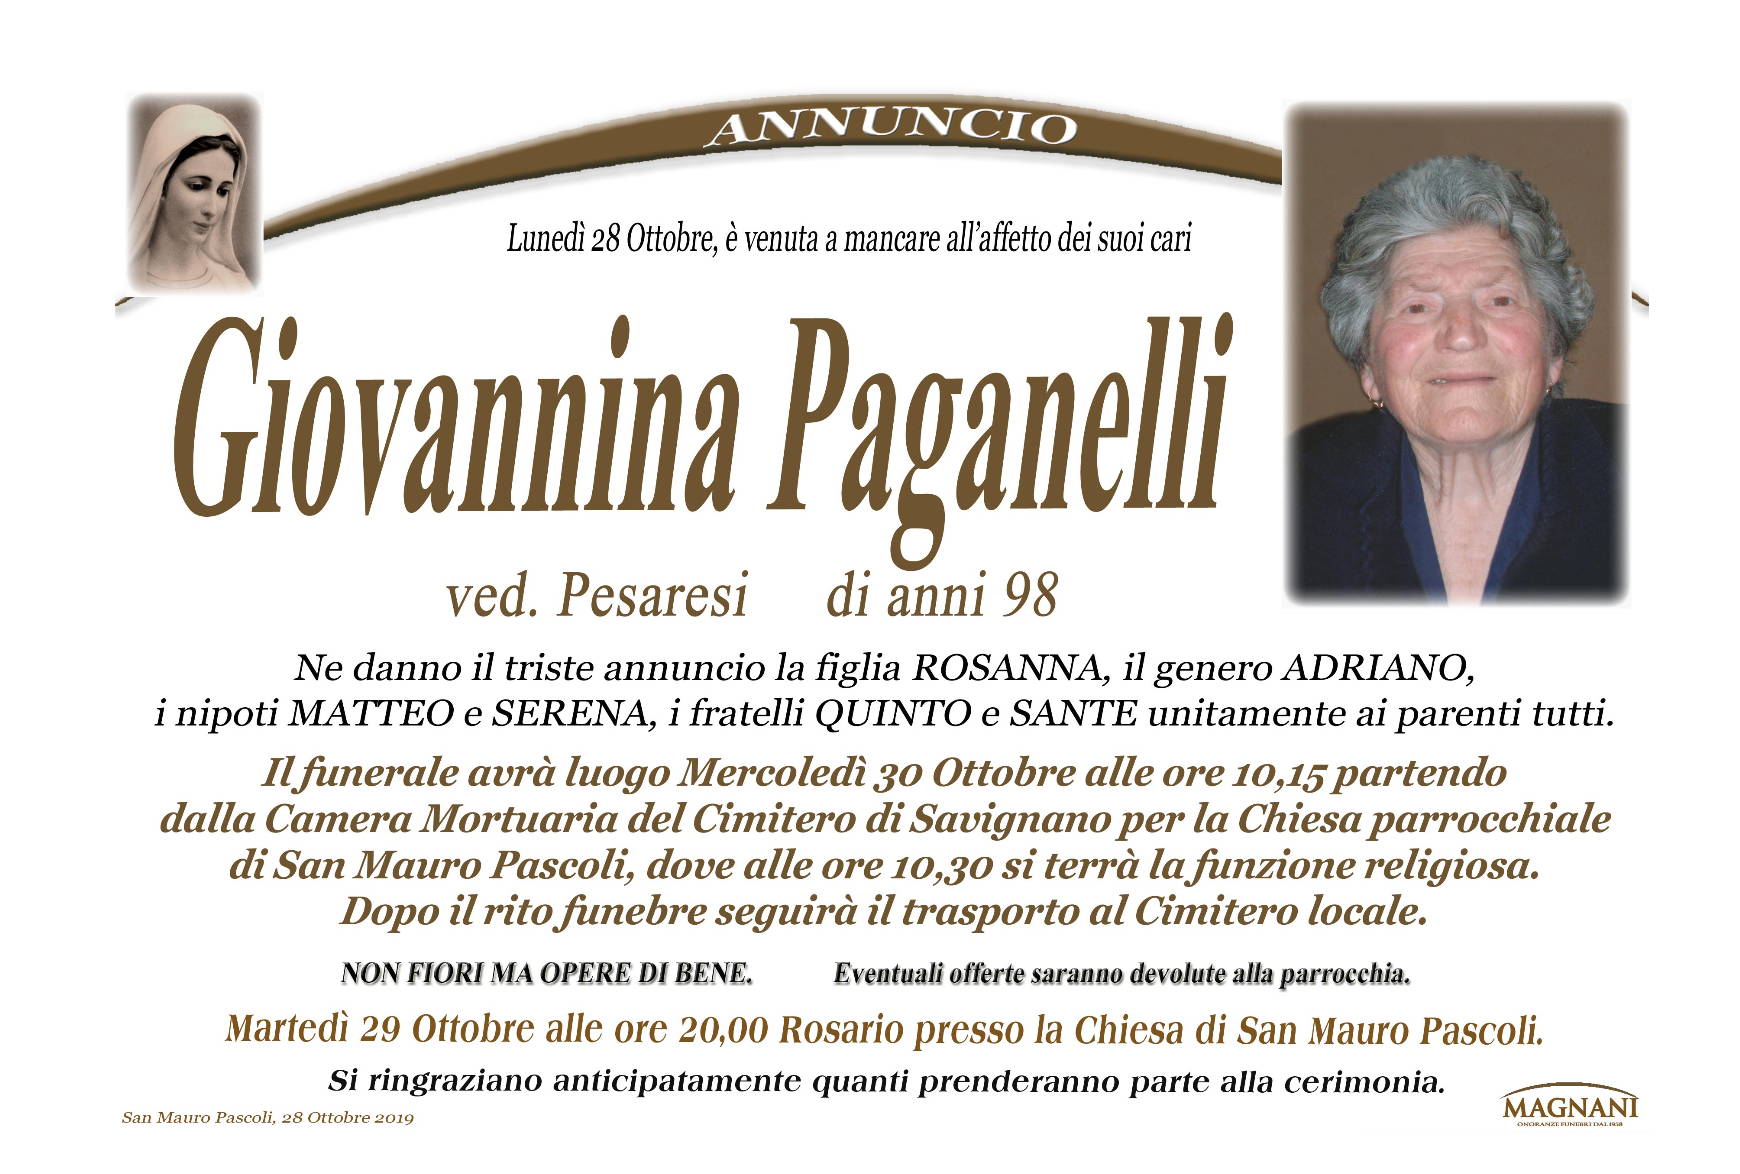 Giovannina Paganelli